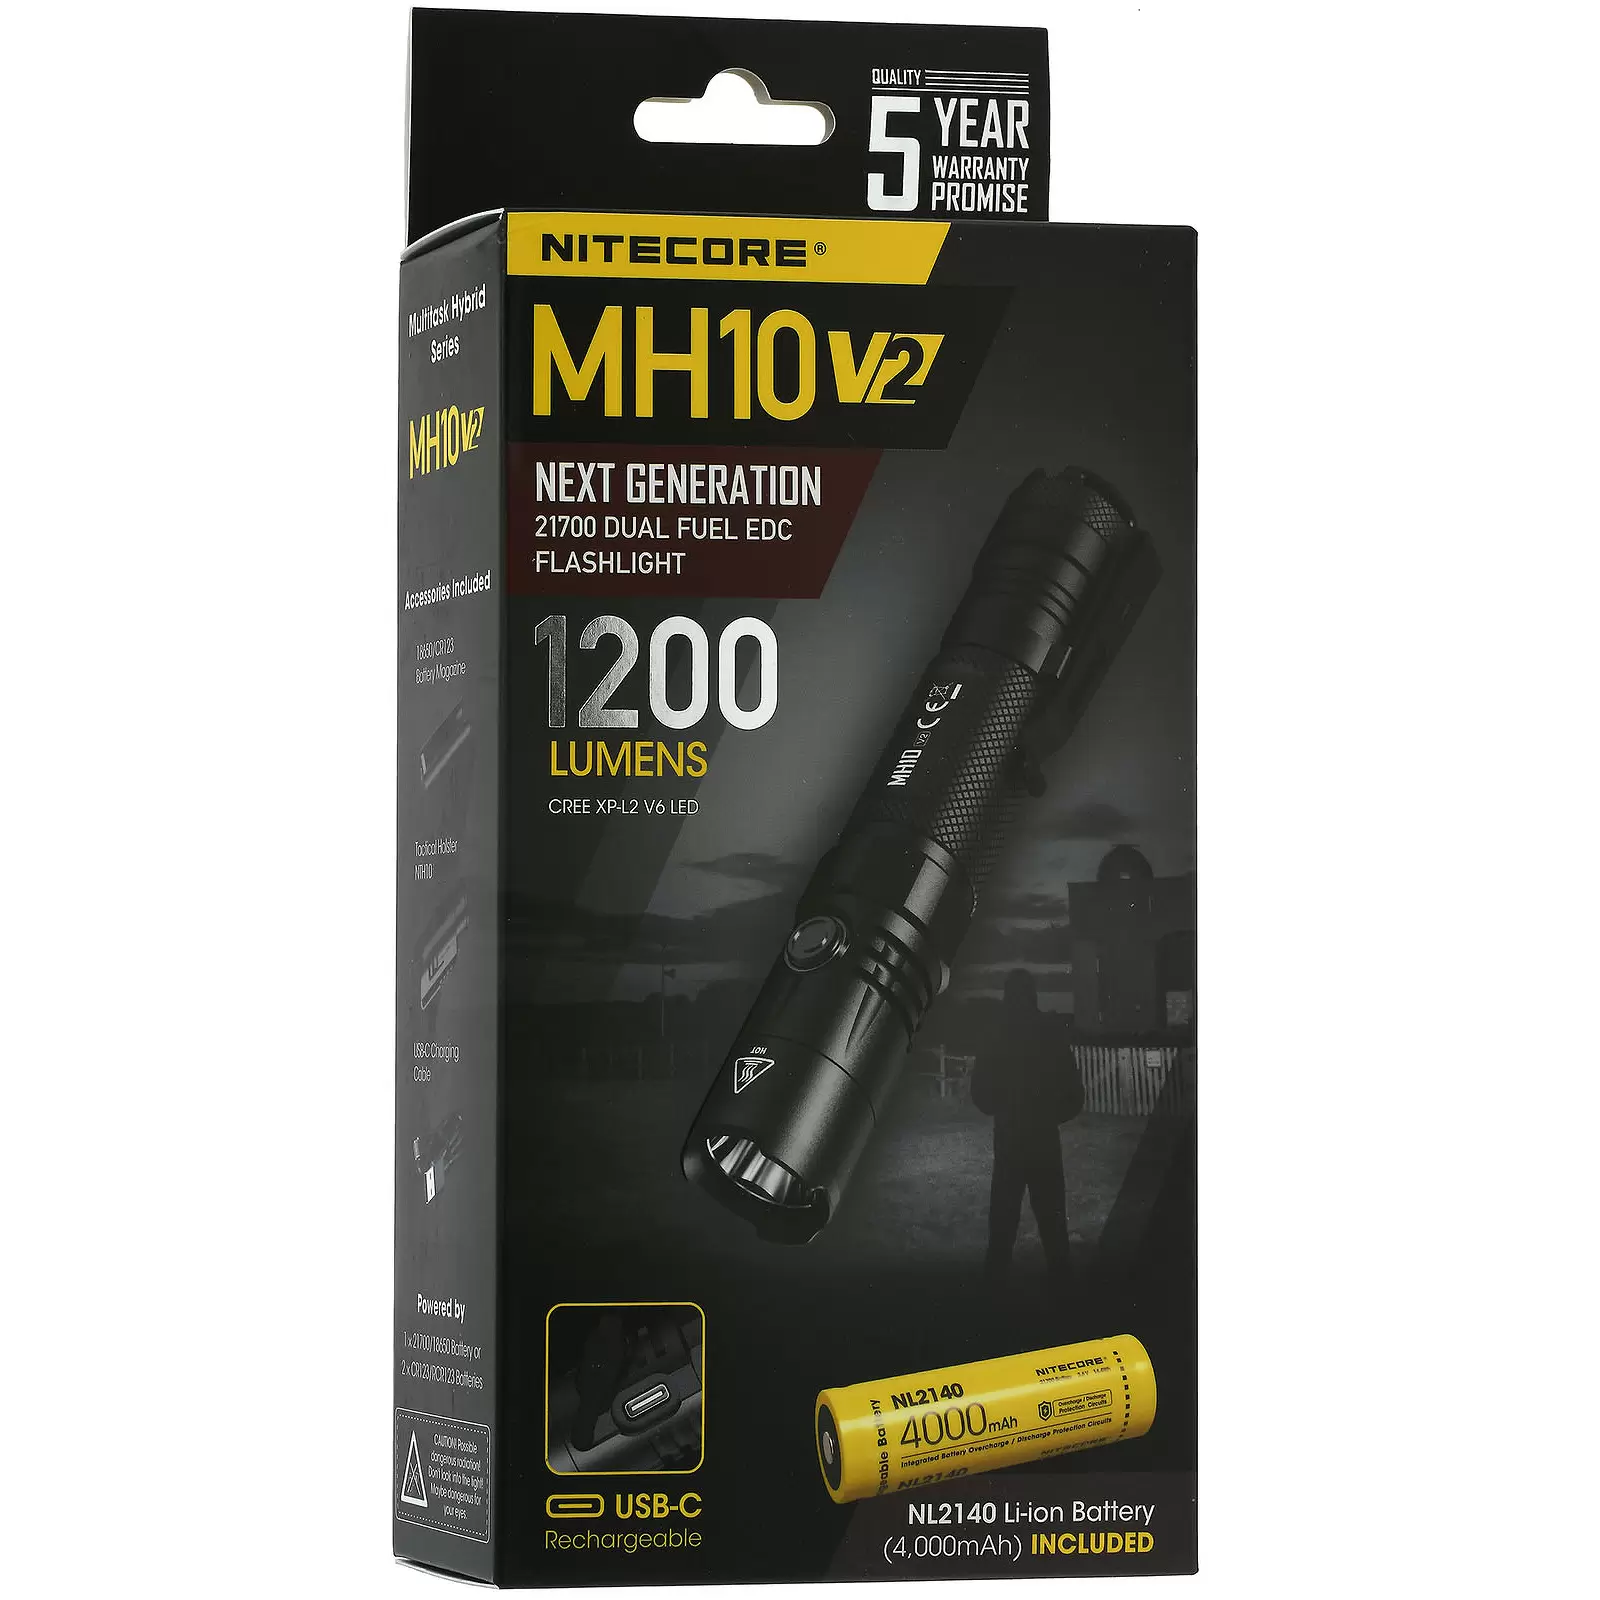 Nitecore Multitask Hybrid MH10 V2 Taschenlampe 1200 Lumen mit USB-C Anschluss